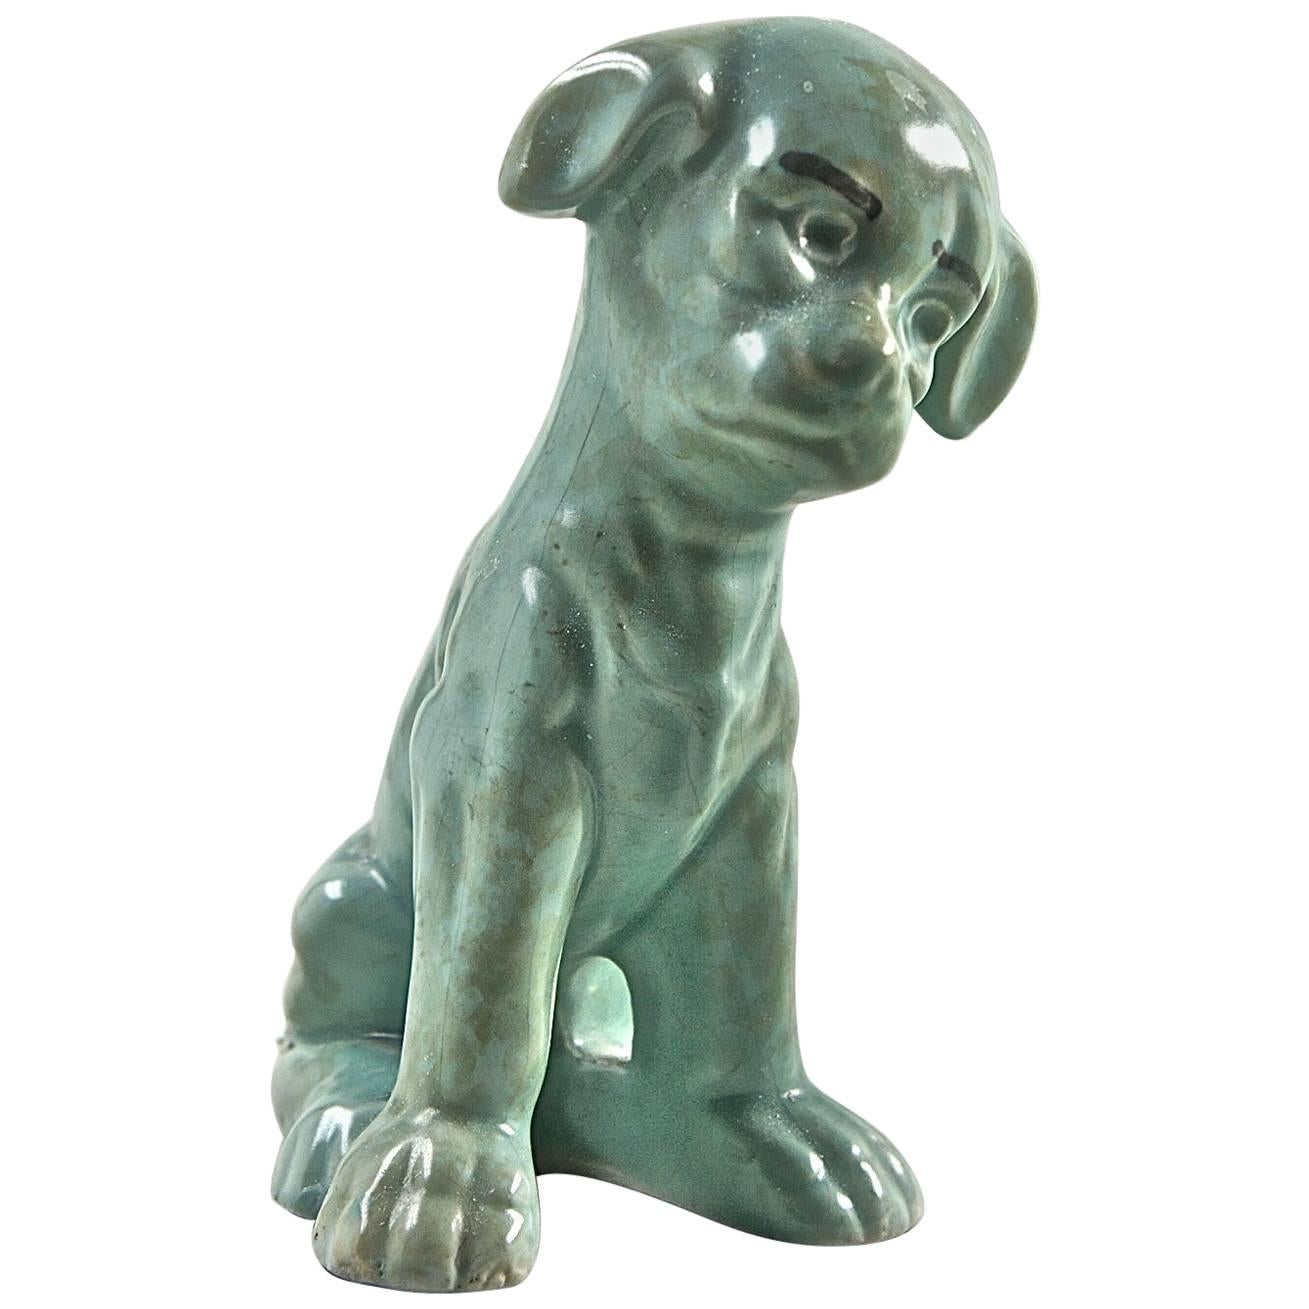 Charming Antique Pottery Terrier Figure "My Friendly Terrier" Celadon Glaze 1960